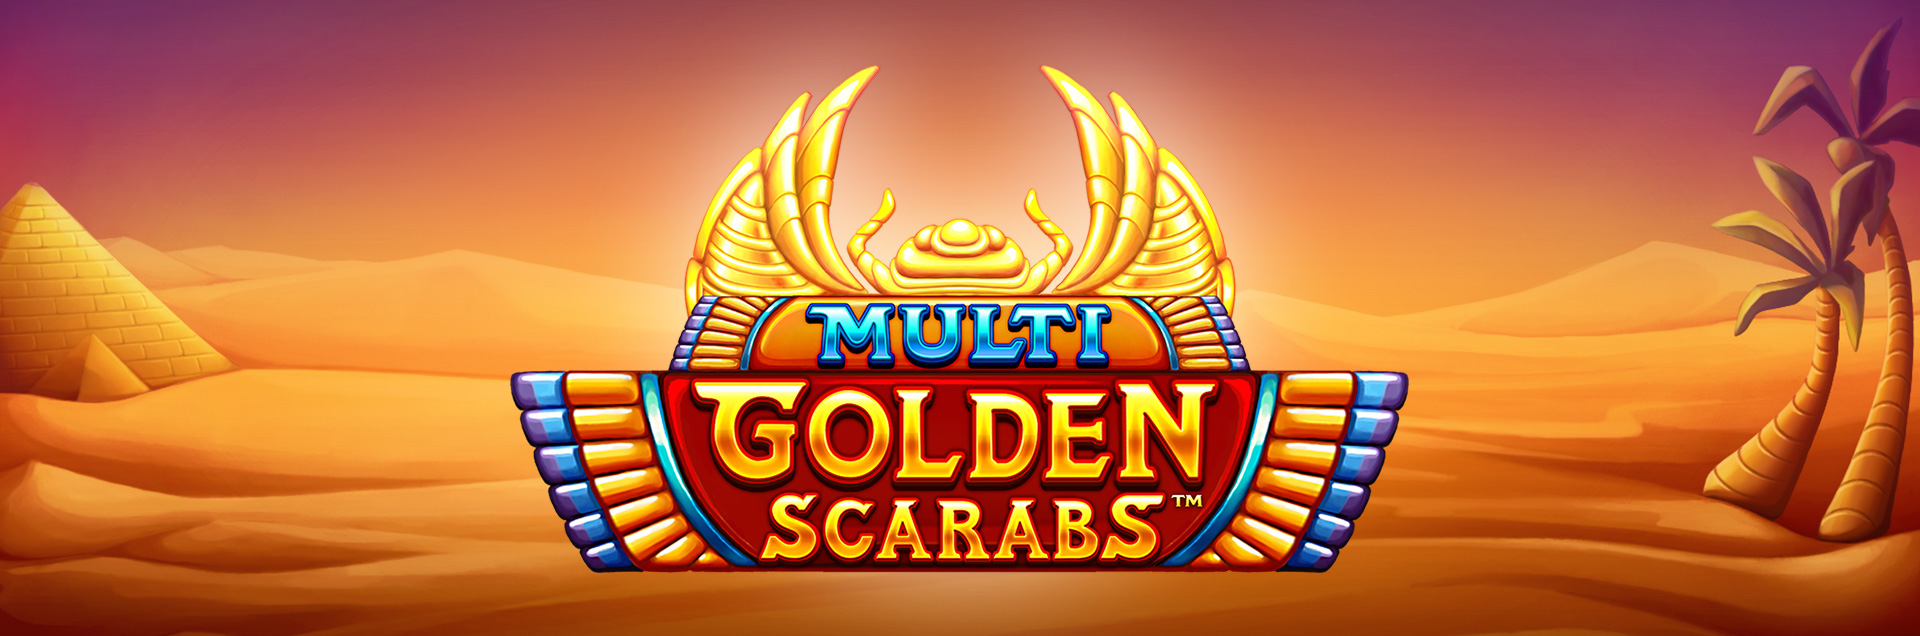 Multi Golden Scarabs header games